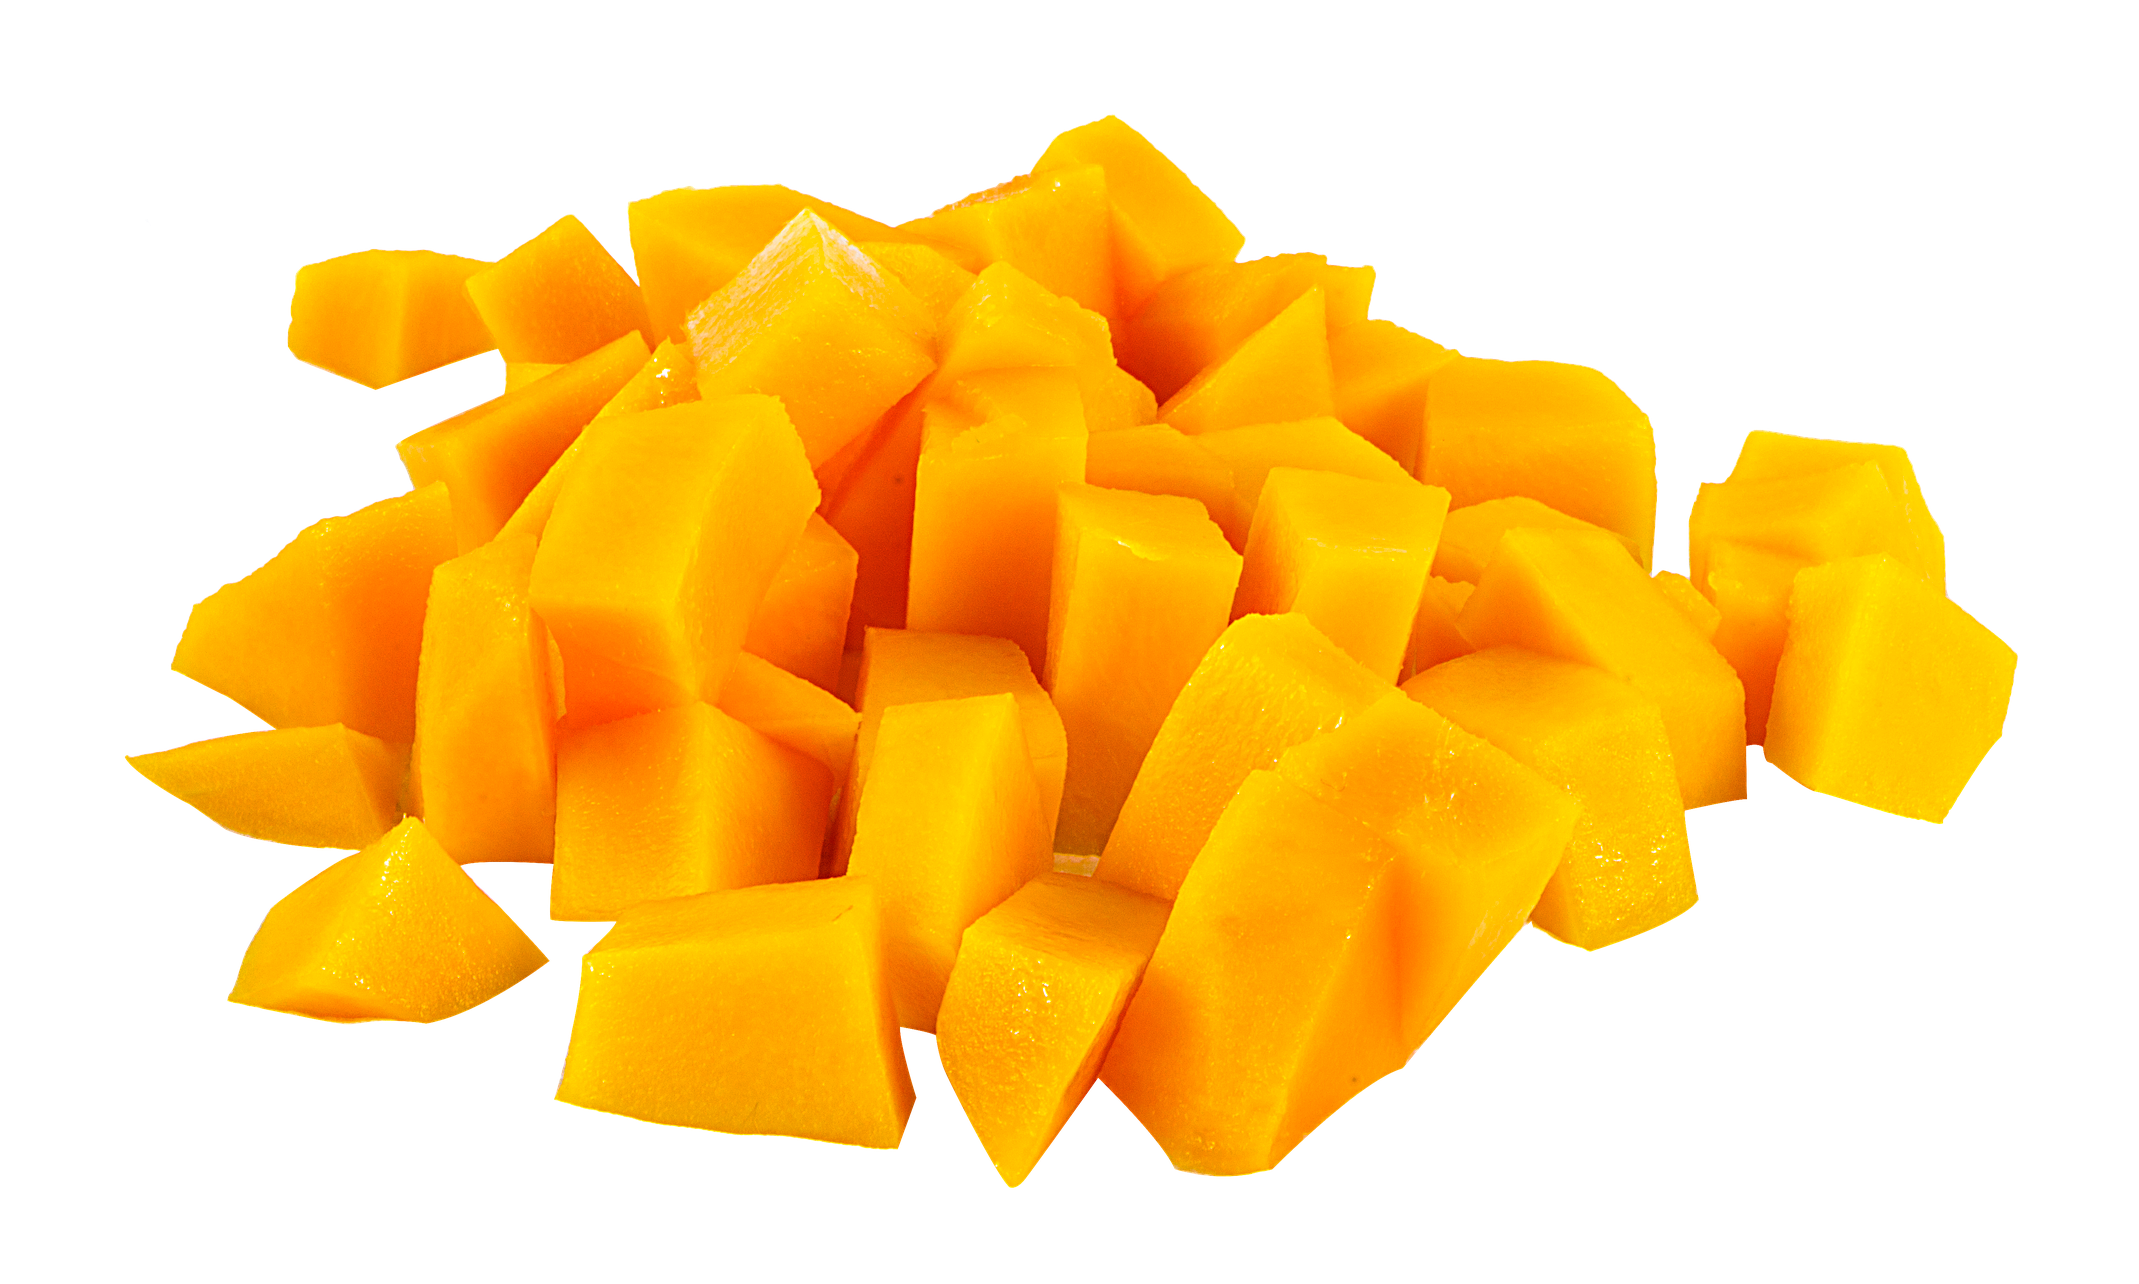 A Pile Of Cut Up Mango